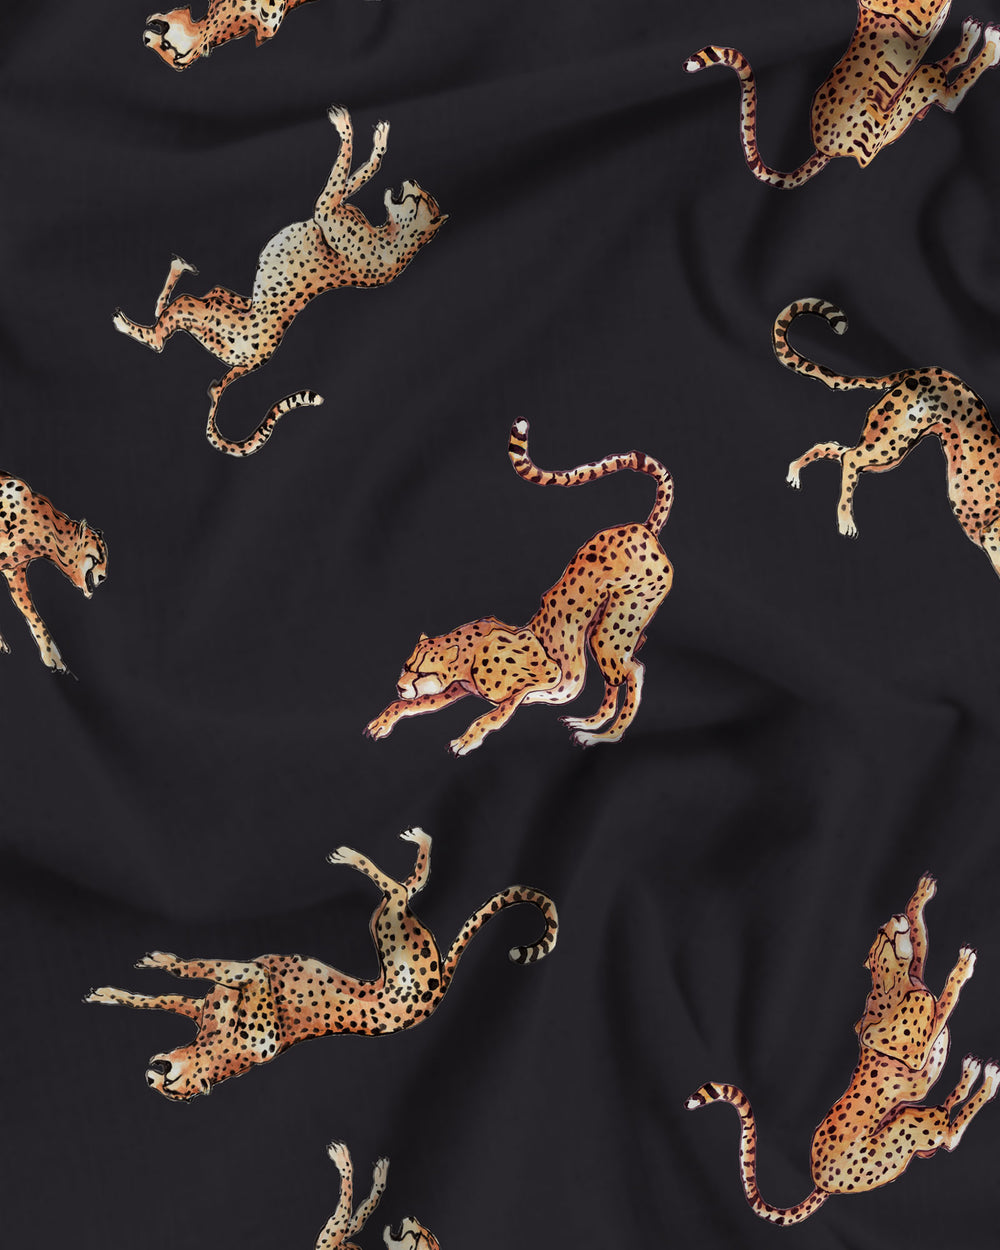 Jumping Cheetahs Pattern Detail - Woodstock Laundry